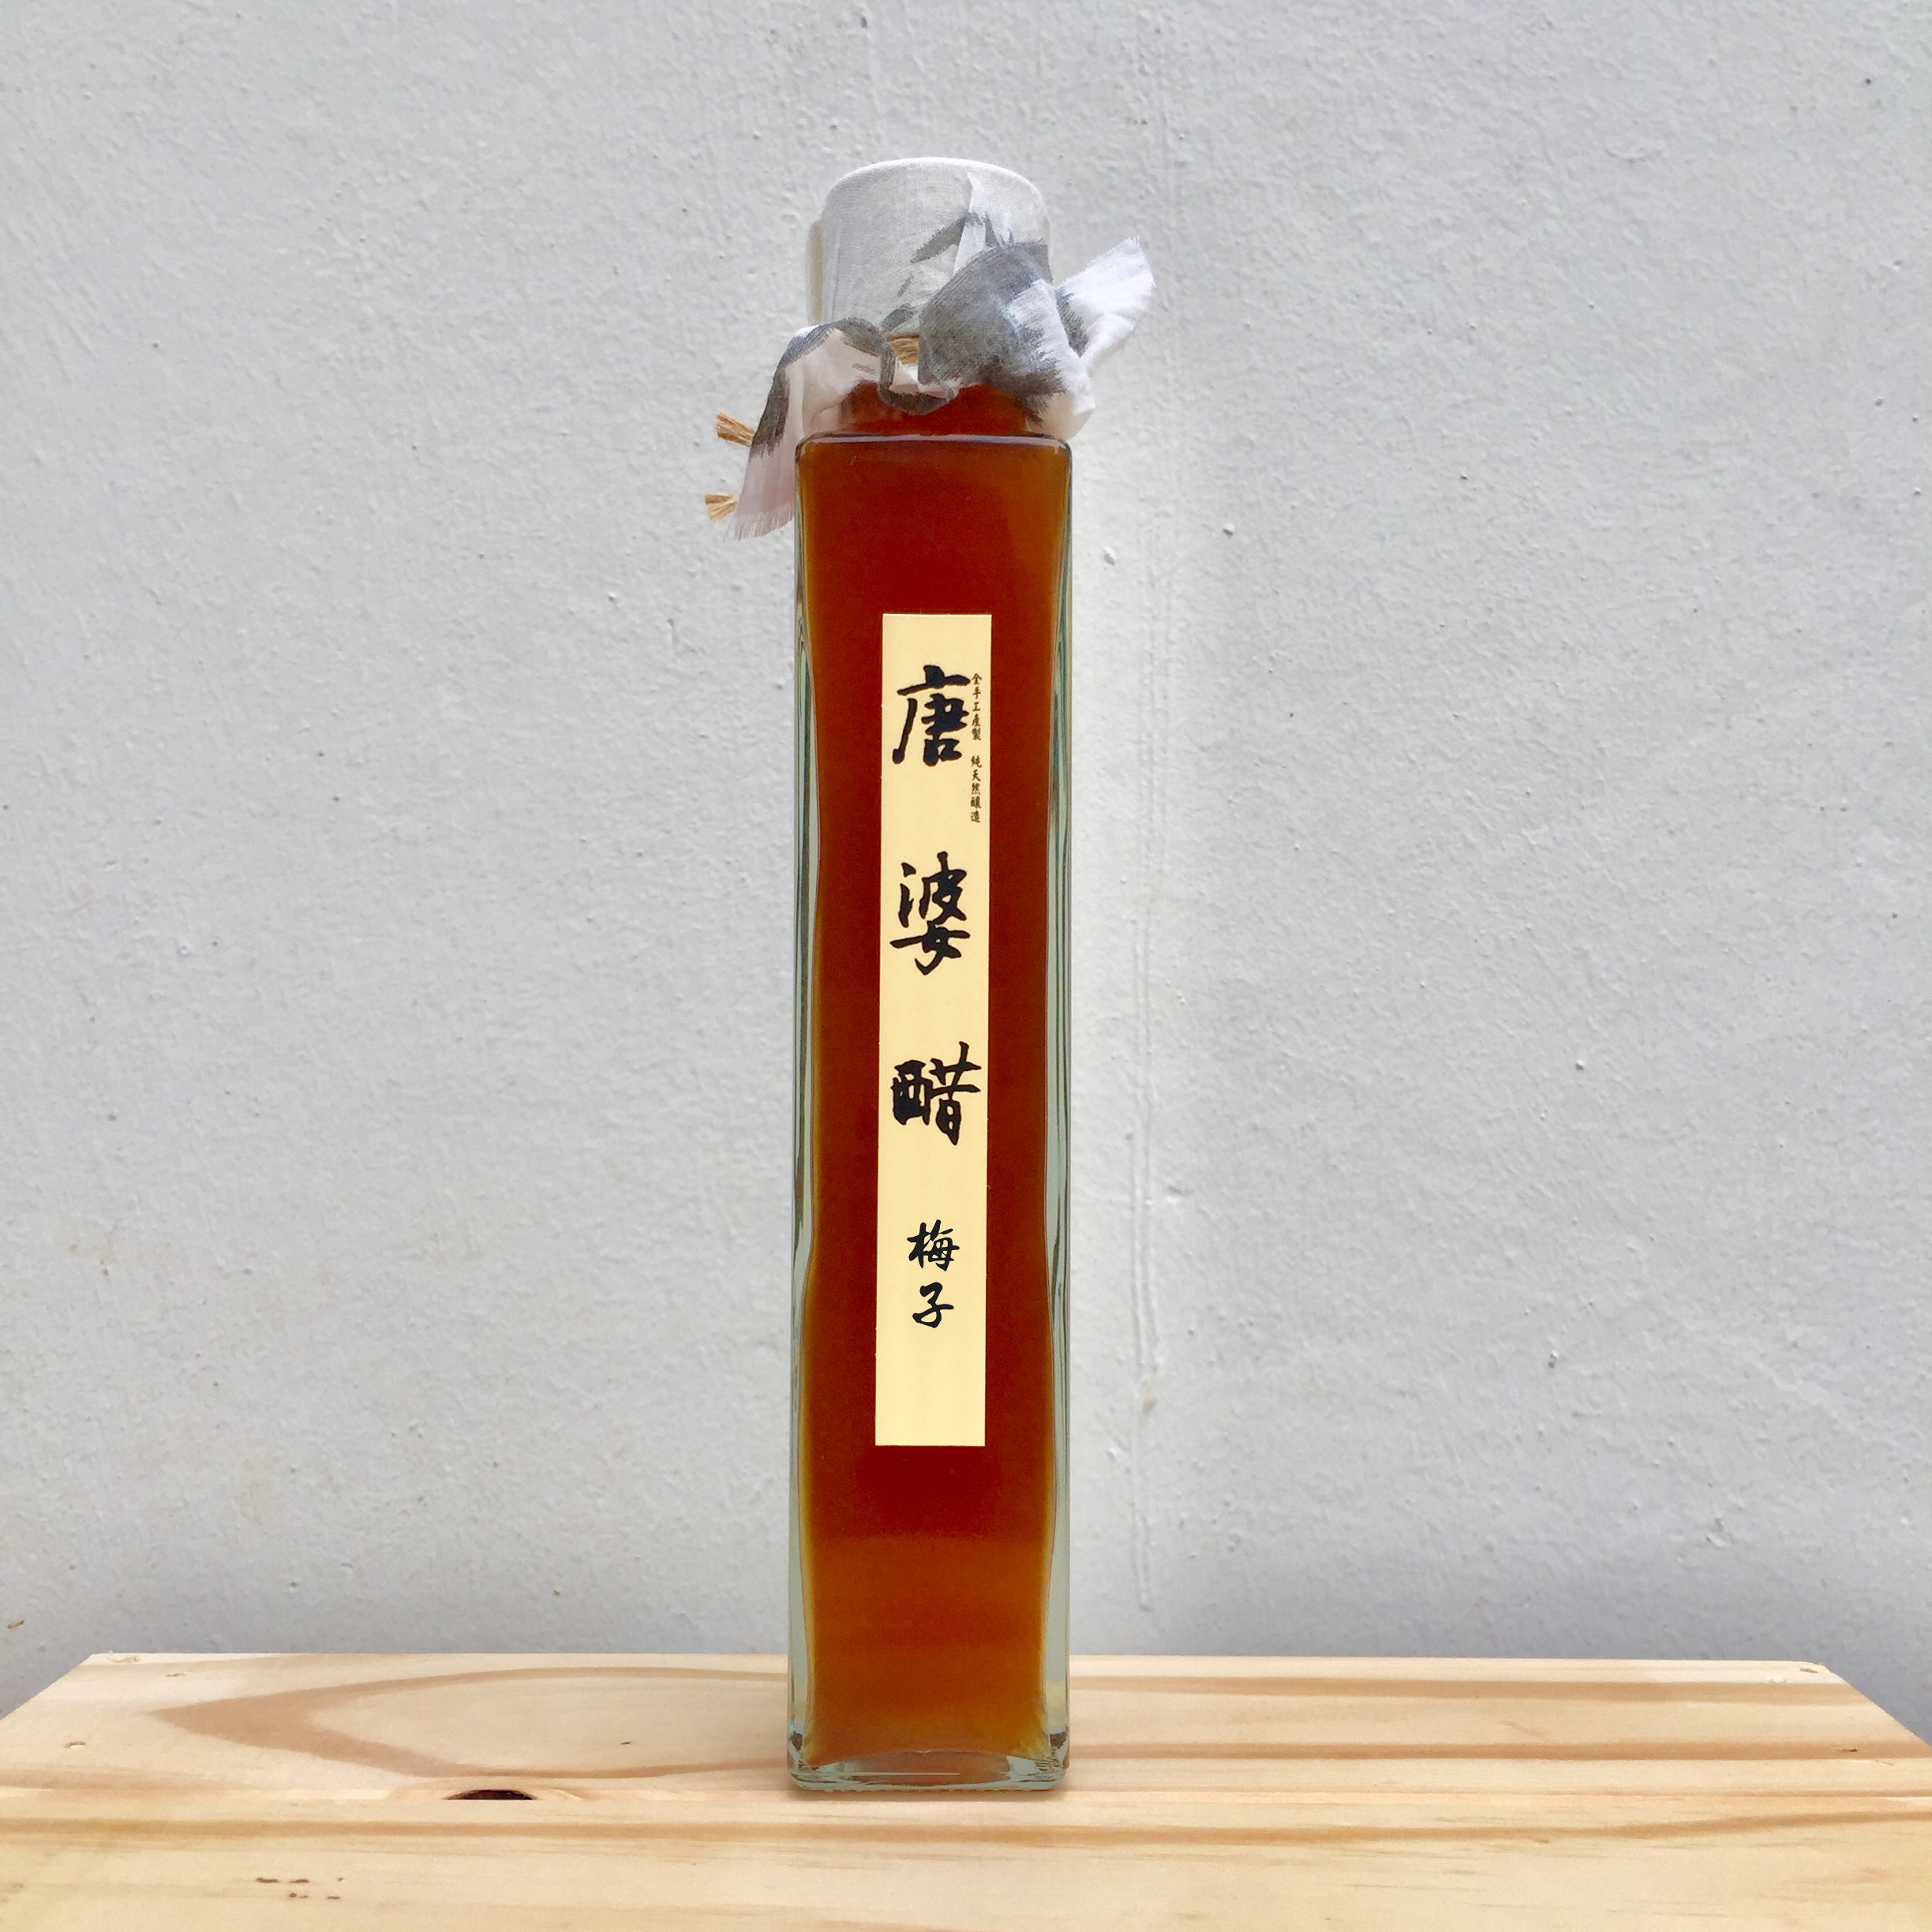 Plum Vinegar (sugar free) 梅子醋